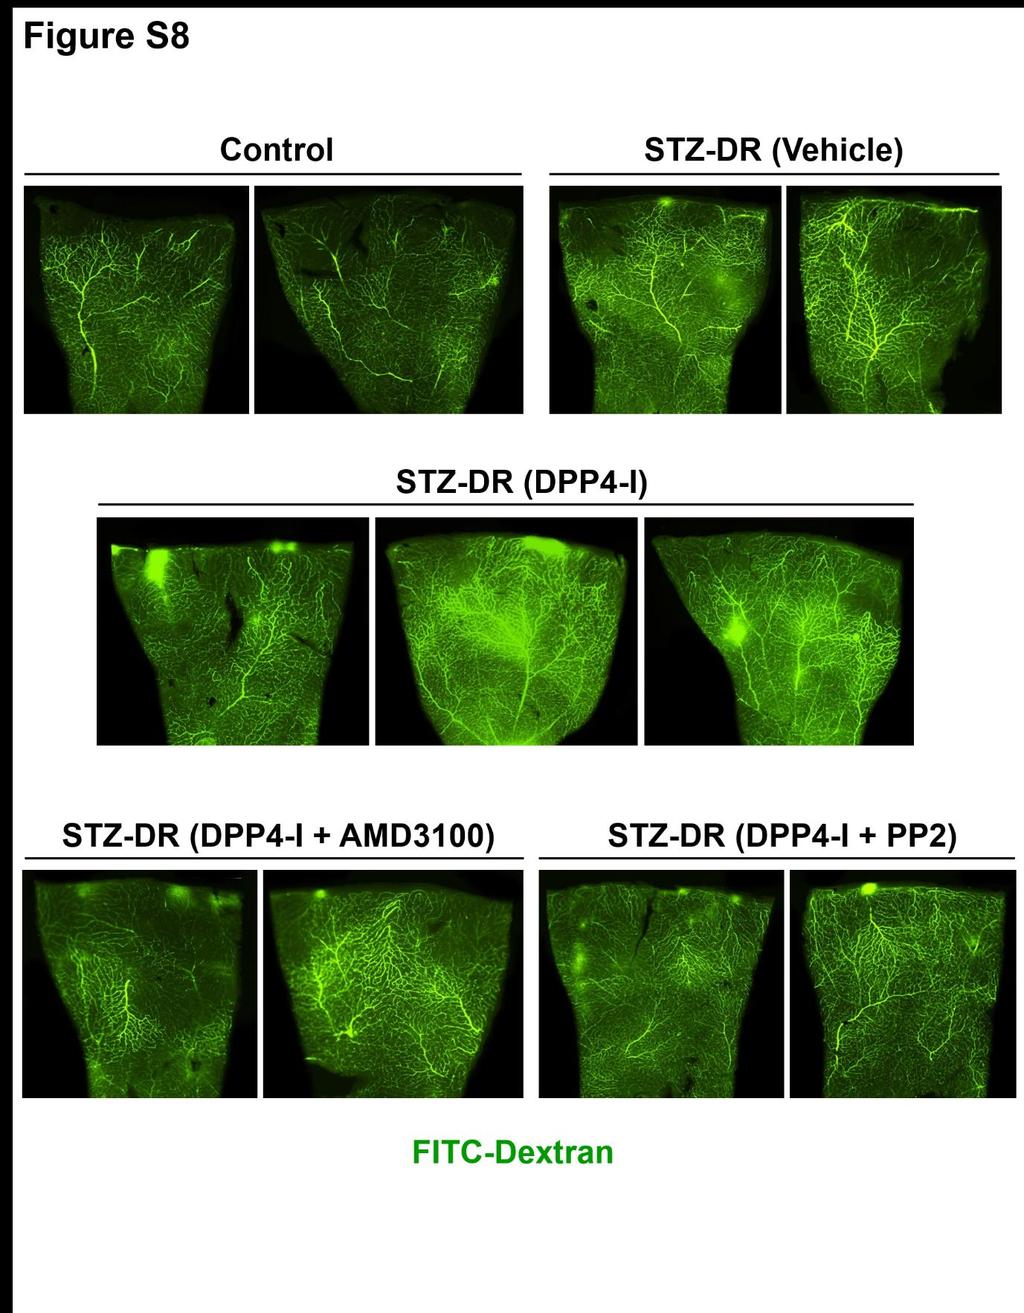 Figure S8. DPP4-inhibitor aggravated vascular leakage in the retinas of diabetic mice.